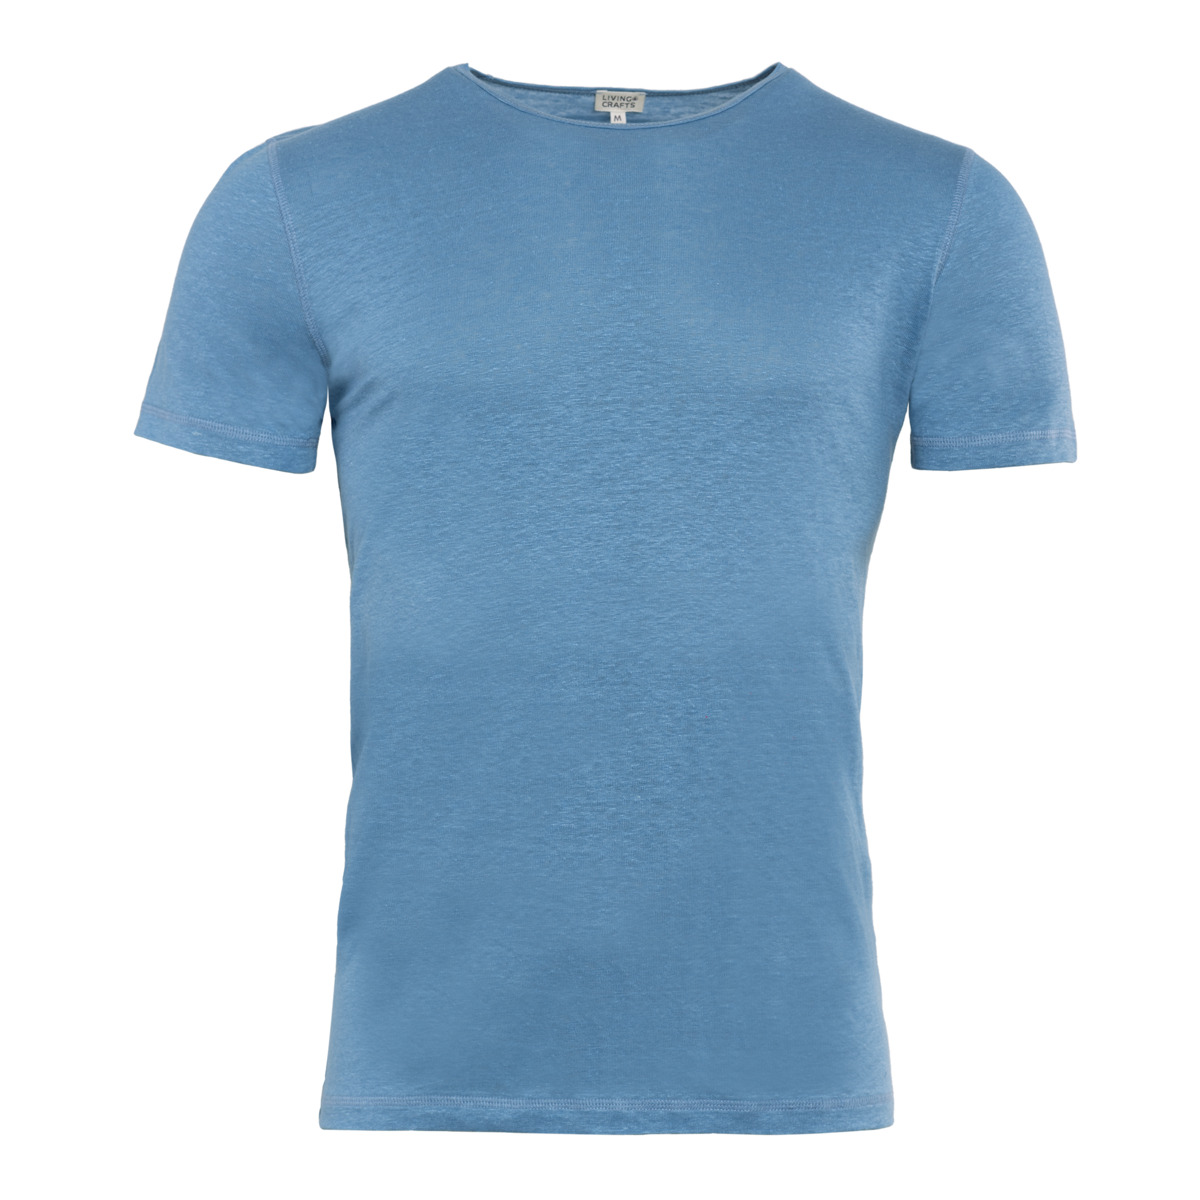 Blau Leinen T-Shirt, ANDY